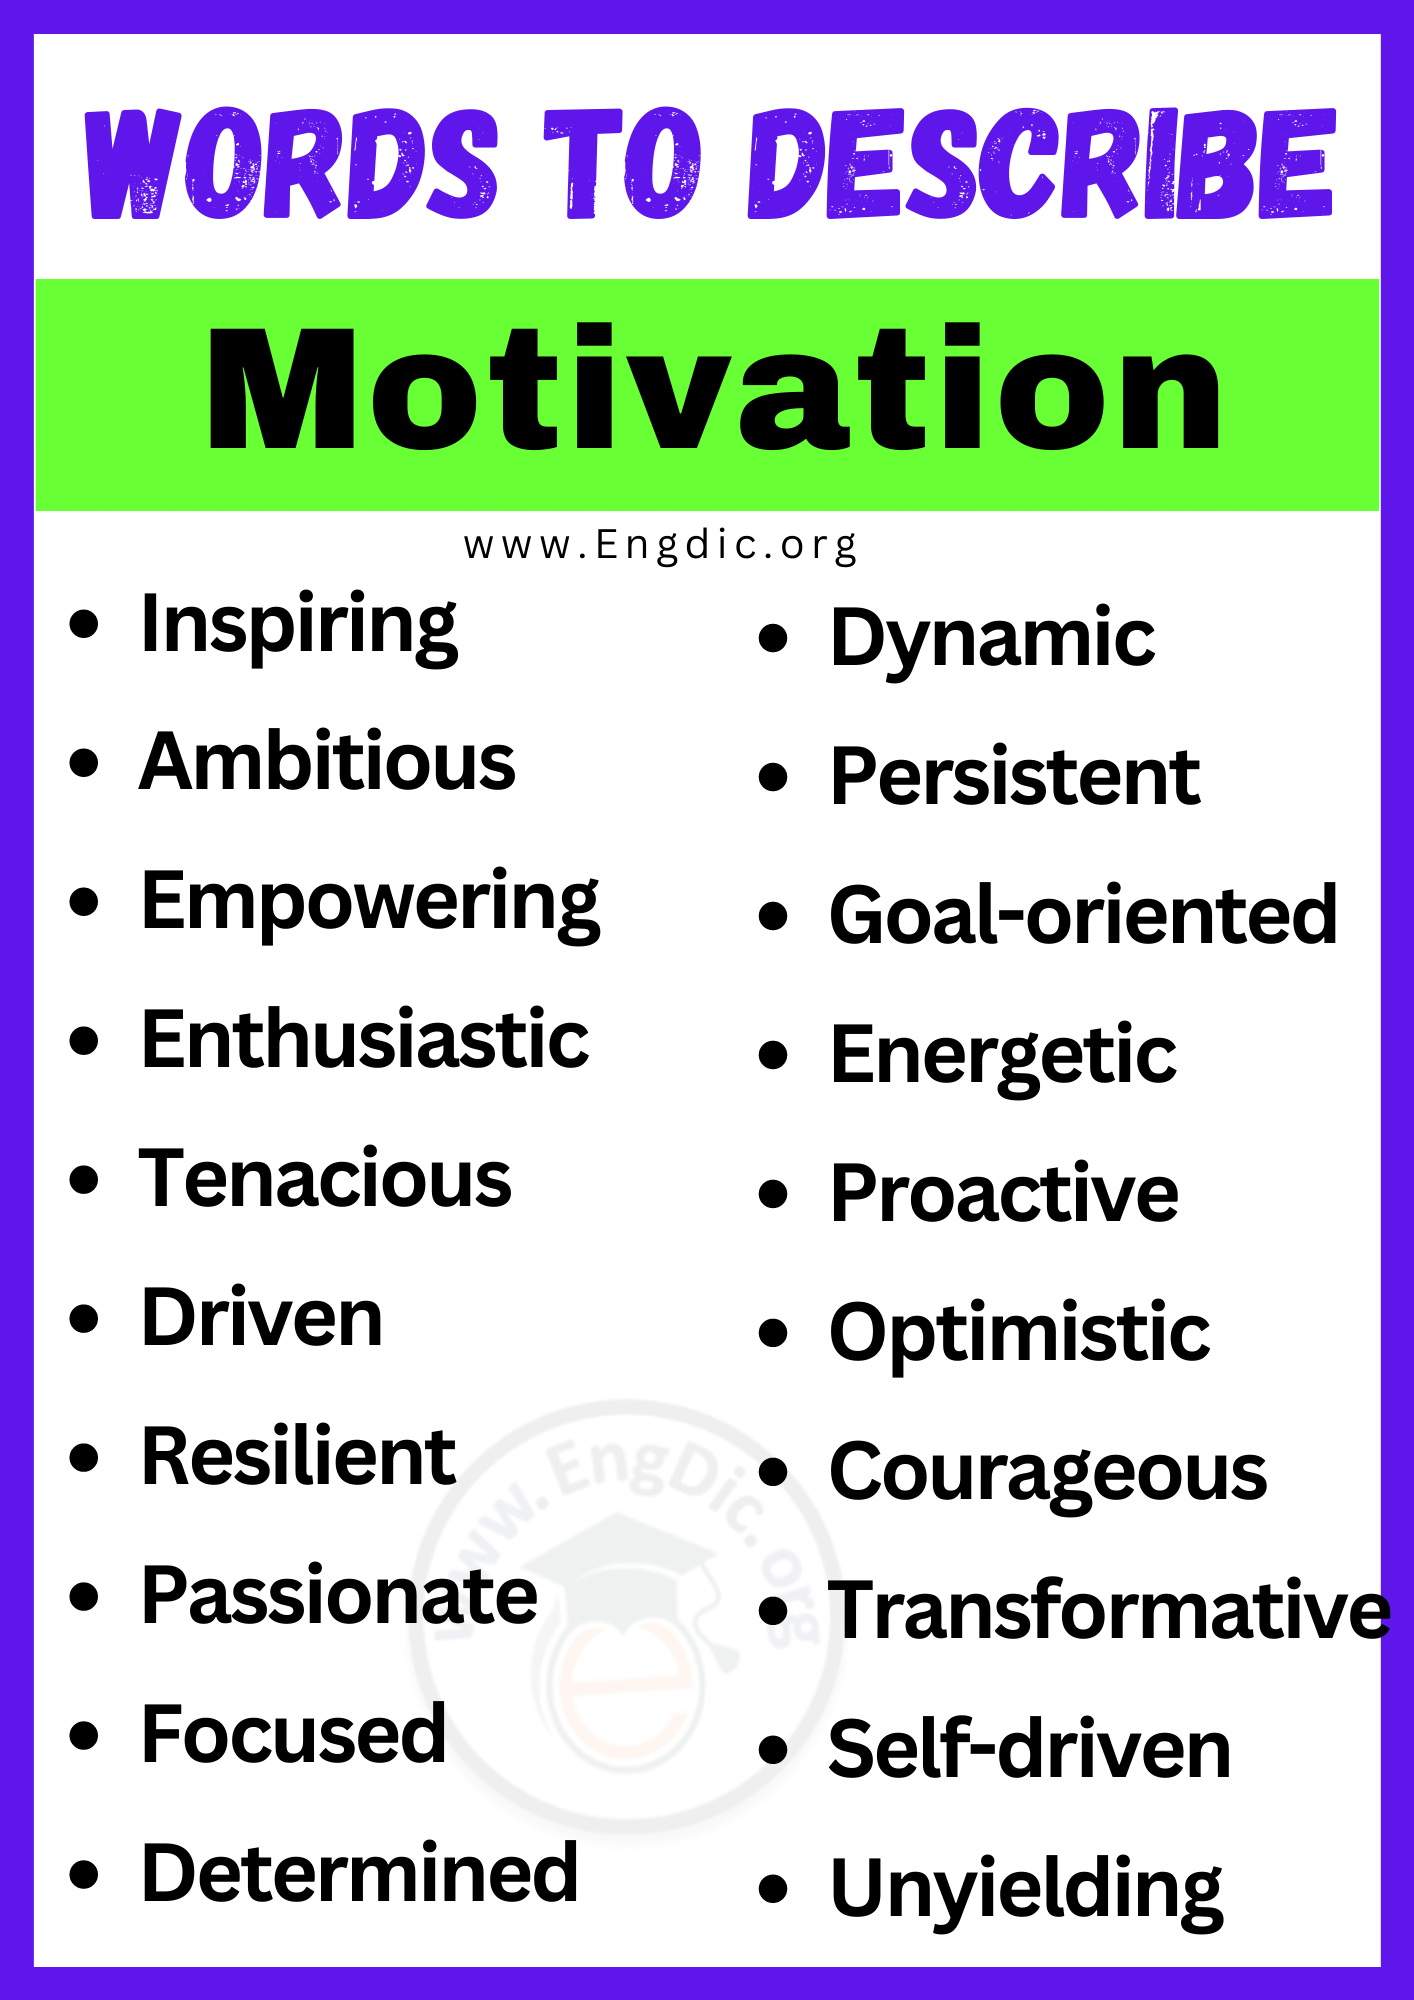 Words to Describe a Motivation